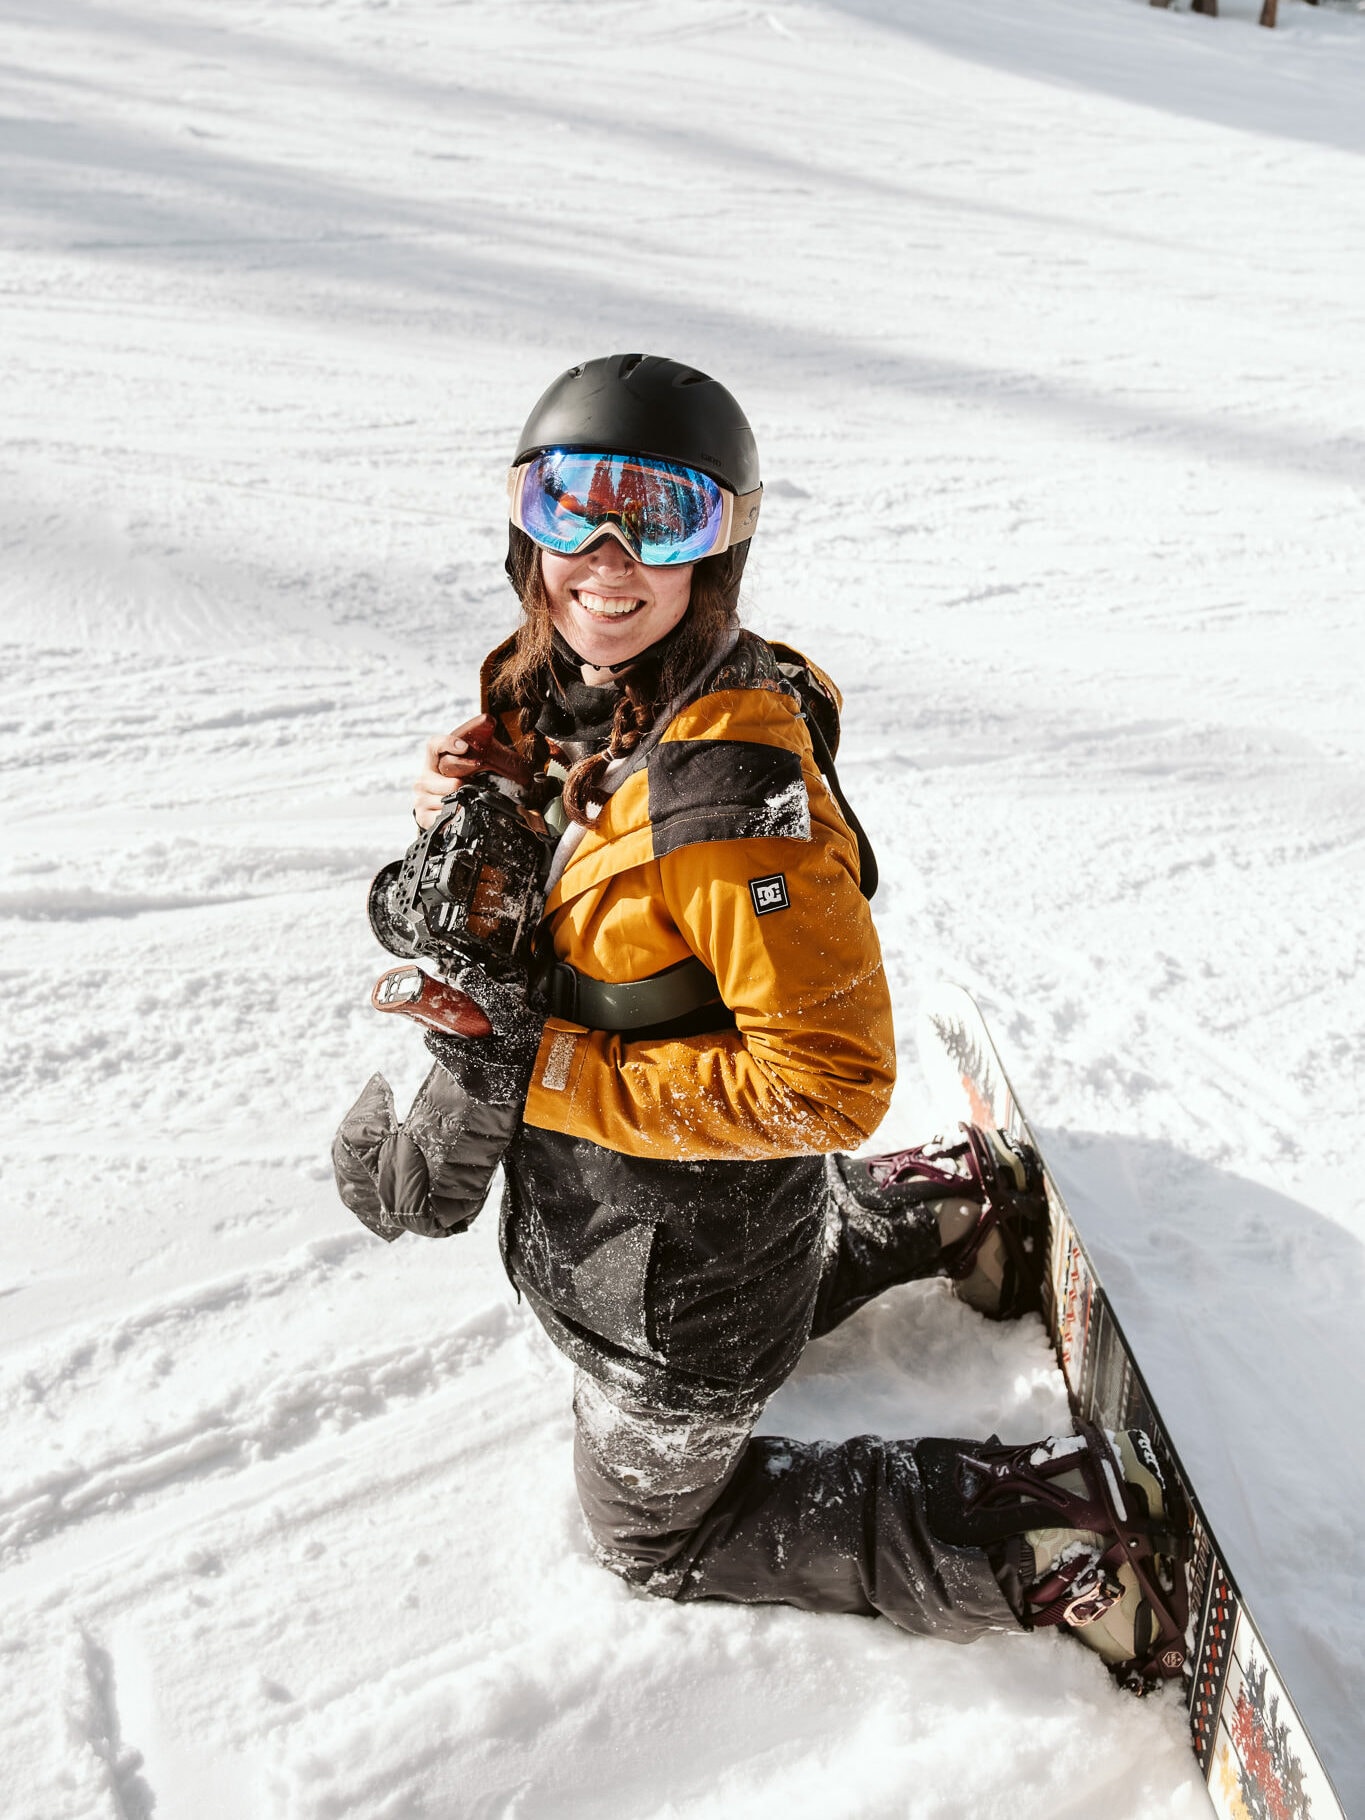 Embr Films is a Colorado ski & snowboard elopement videographer